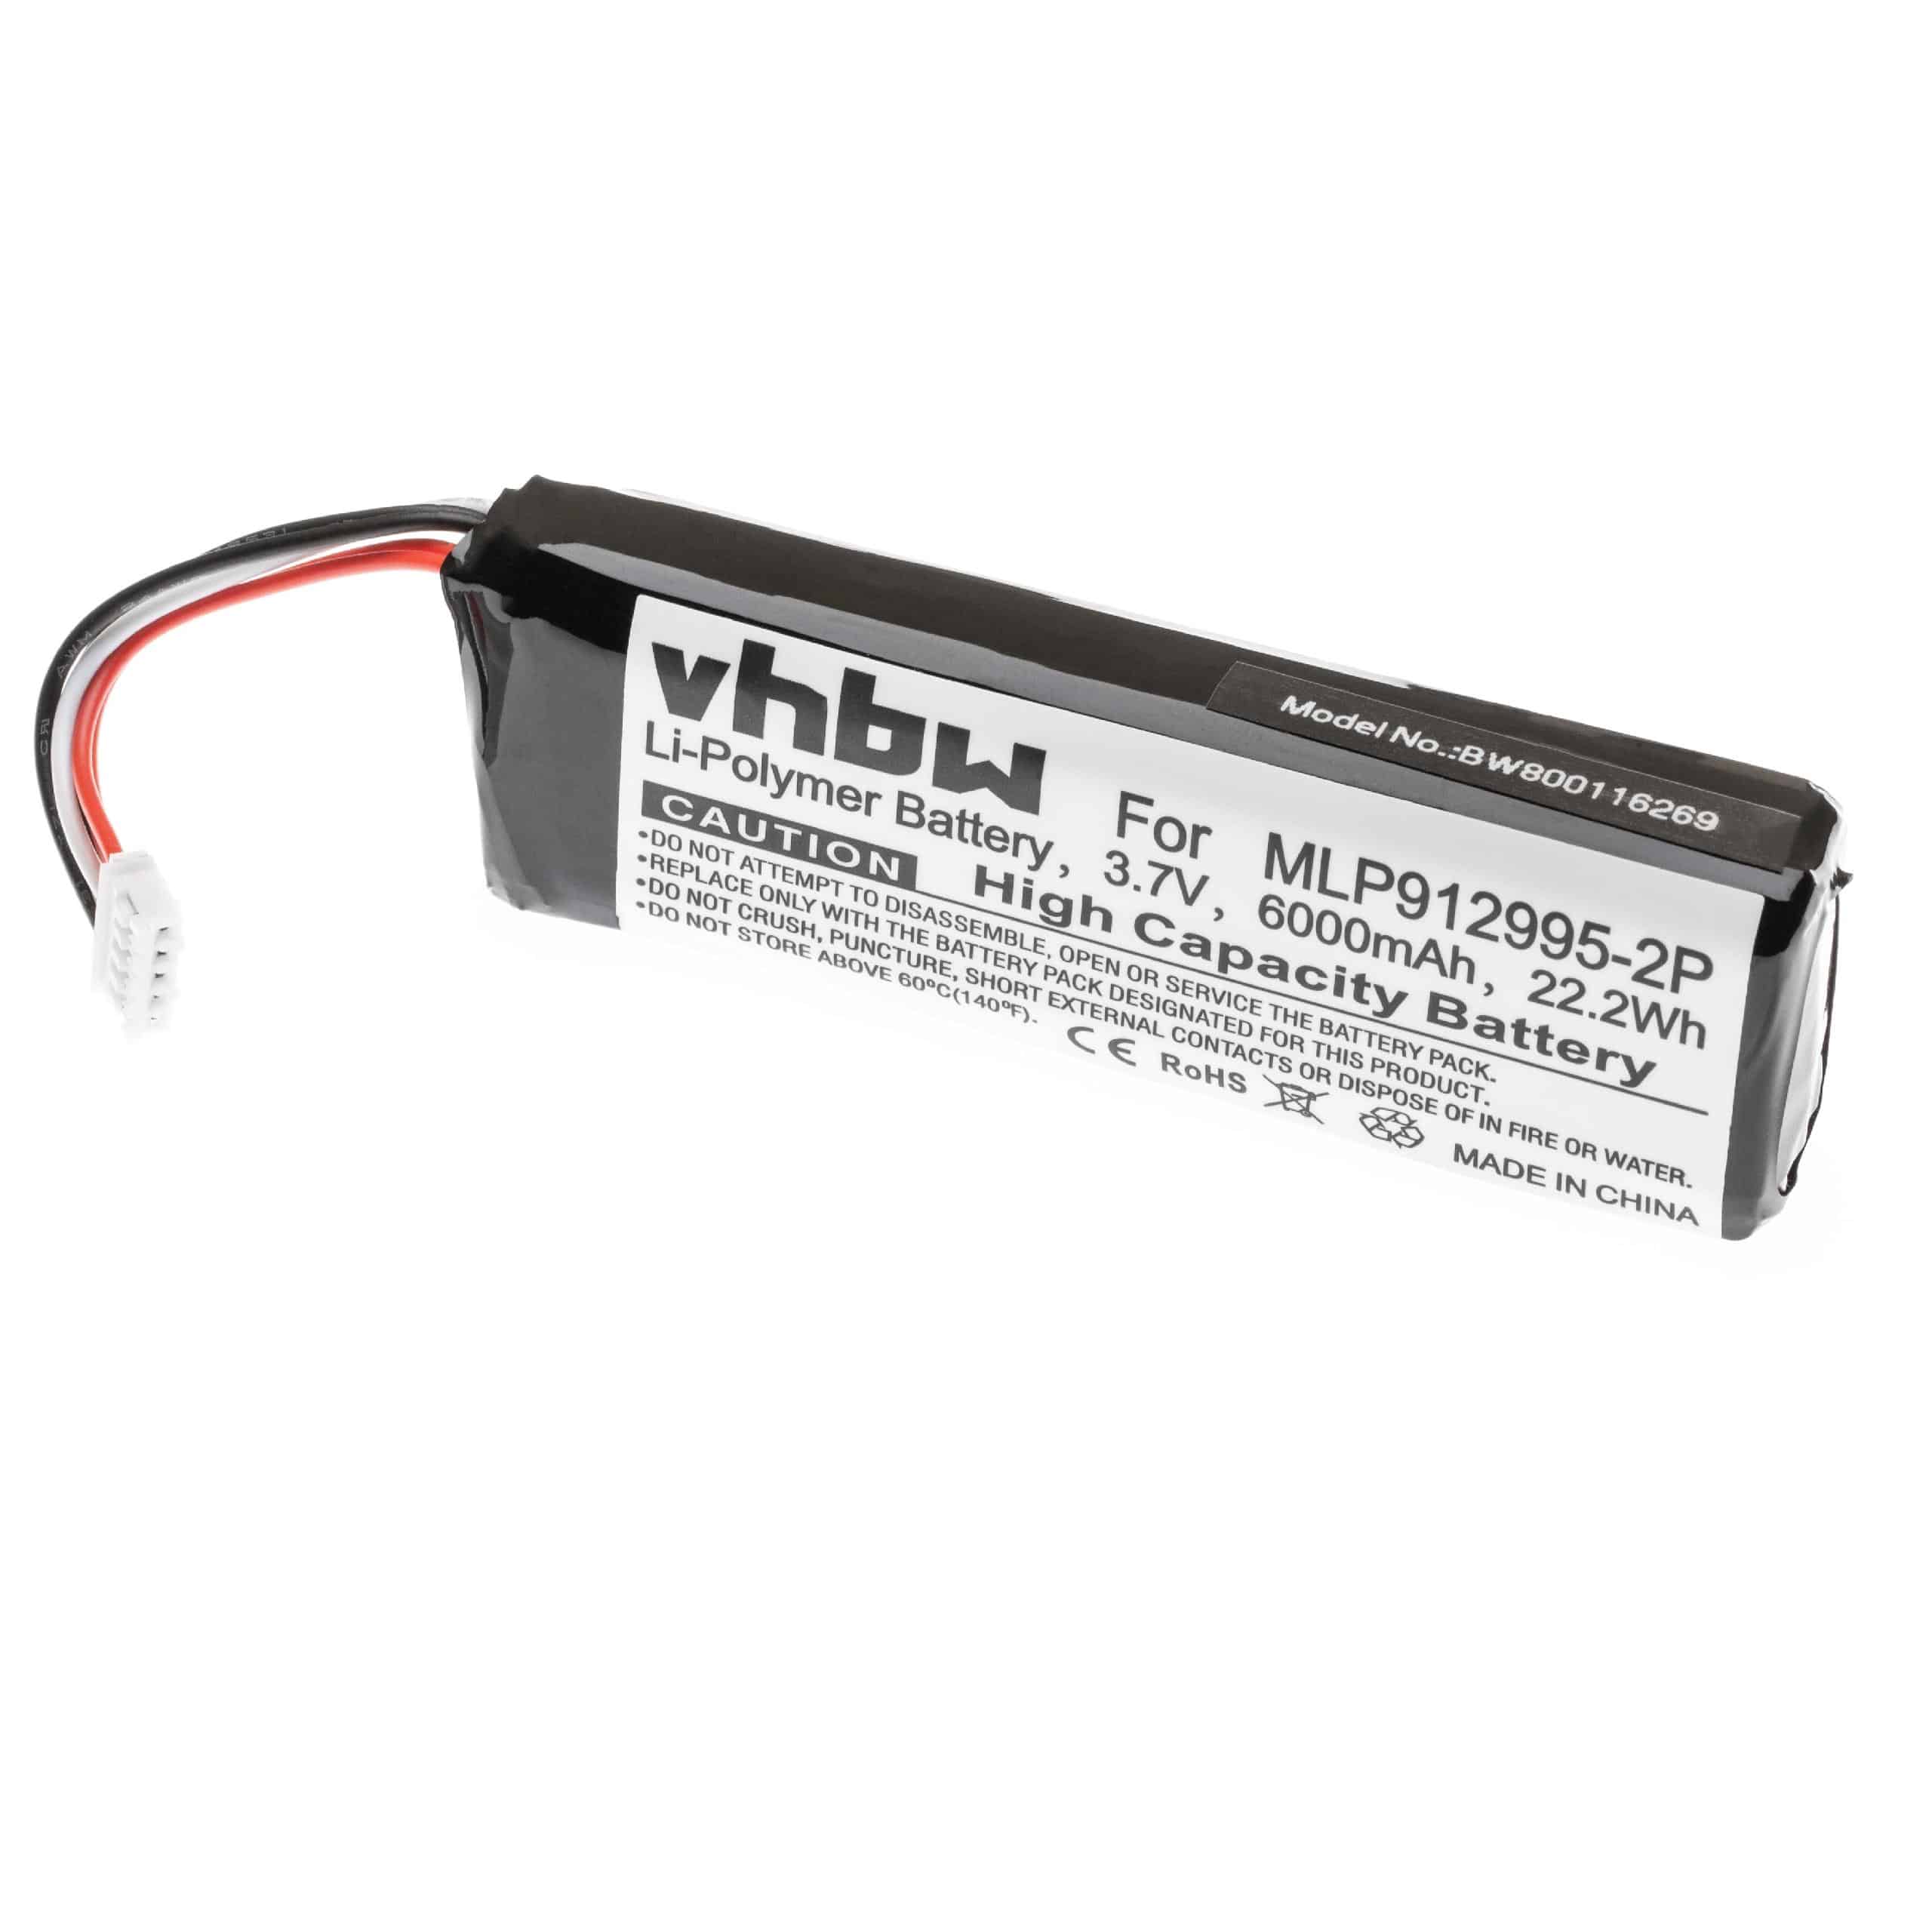 Batería reemplaza JBL MLP912995-2P para altavoces JBL - 6000 mAh 3,7 V Li-poli